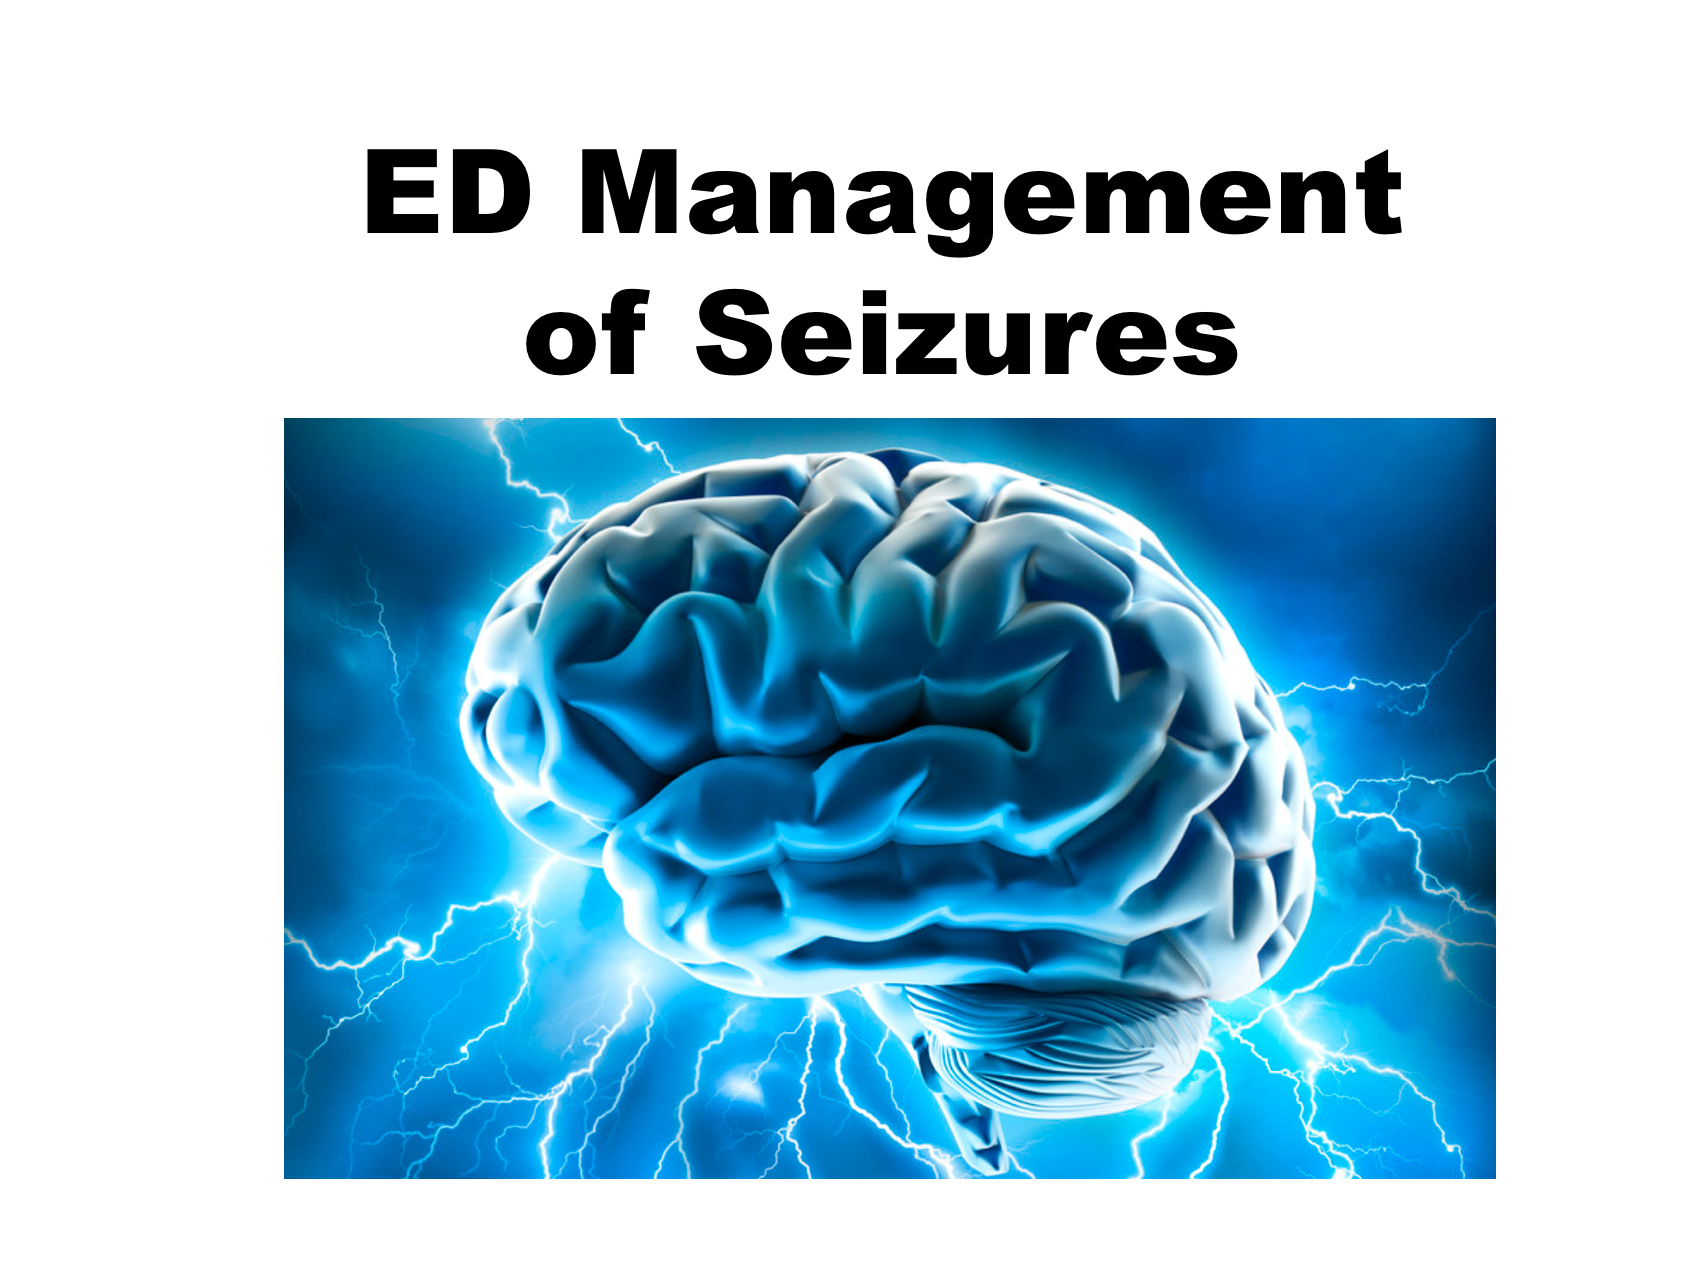 emDOCs.net – Emergency Medicine EducationTreatment of Seizures in the Emergency Department: Pearls and Pitfalls - emDOCs.net - Emergency Medicine Education